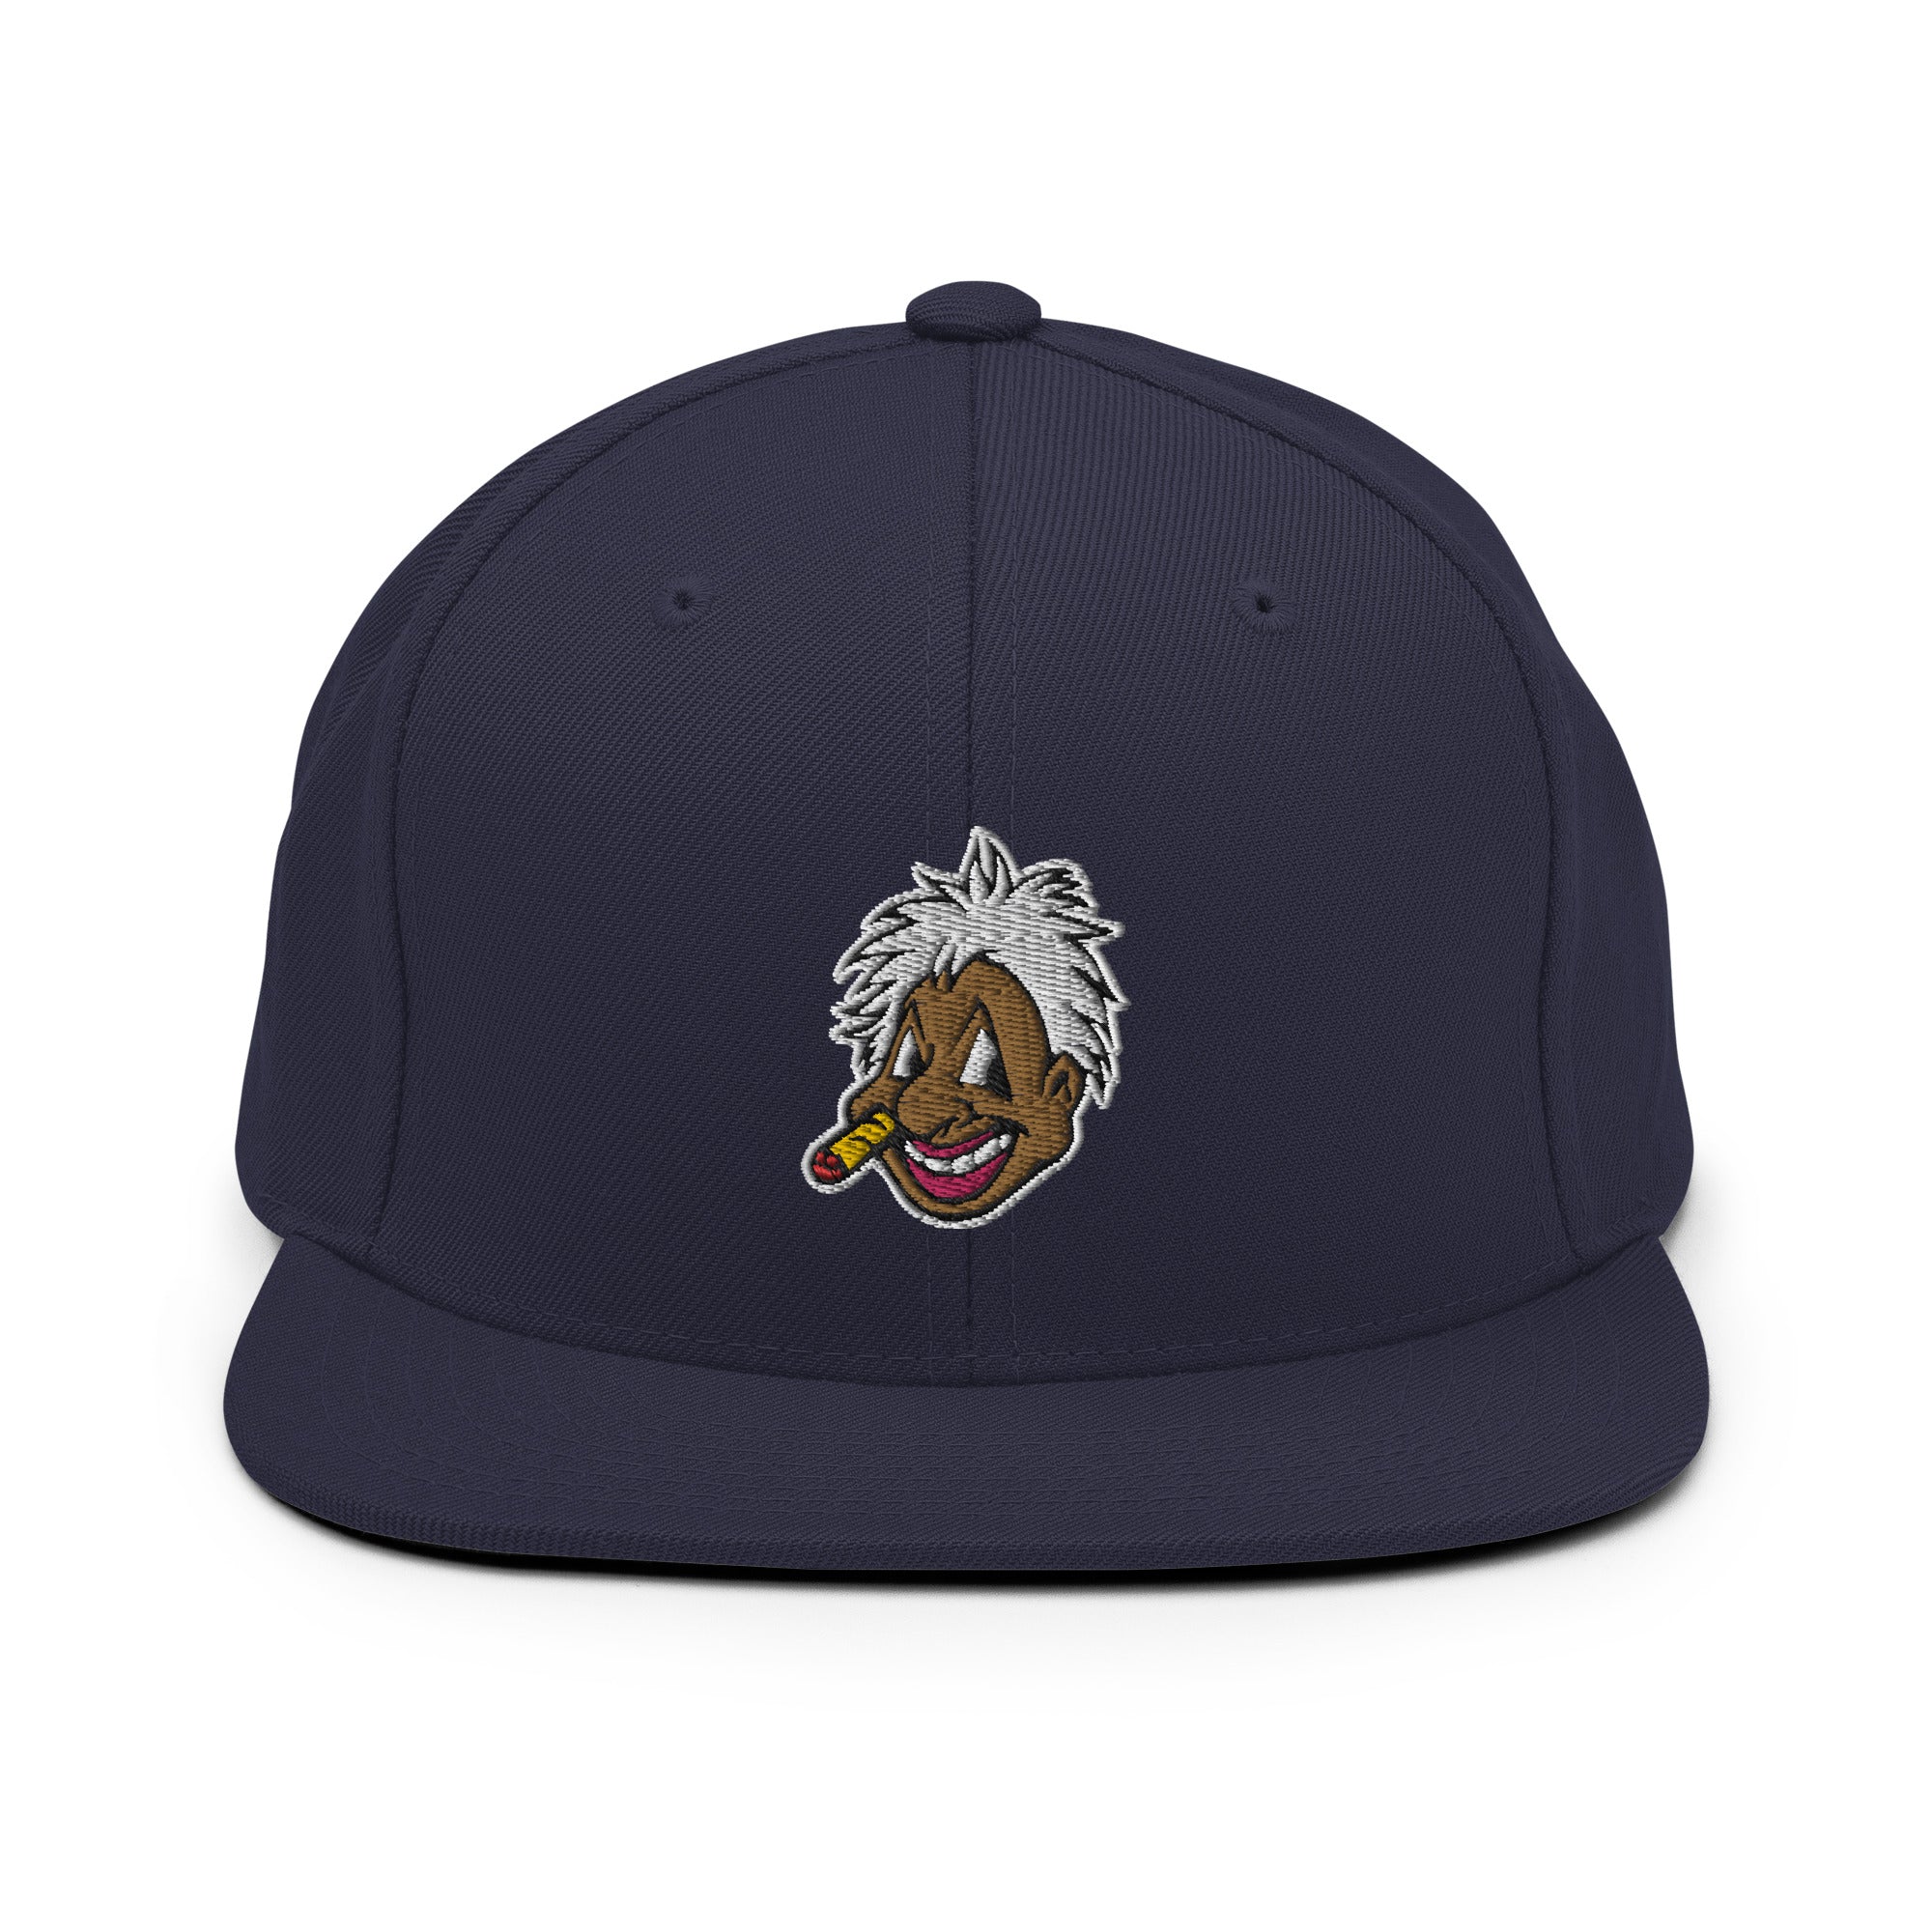 Jobu Cleveland Major League Snapback Hat